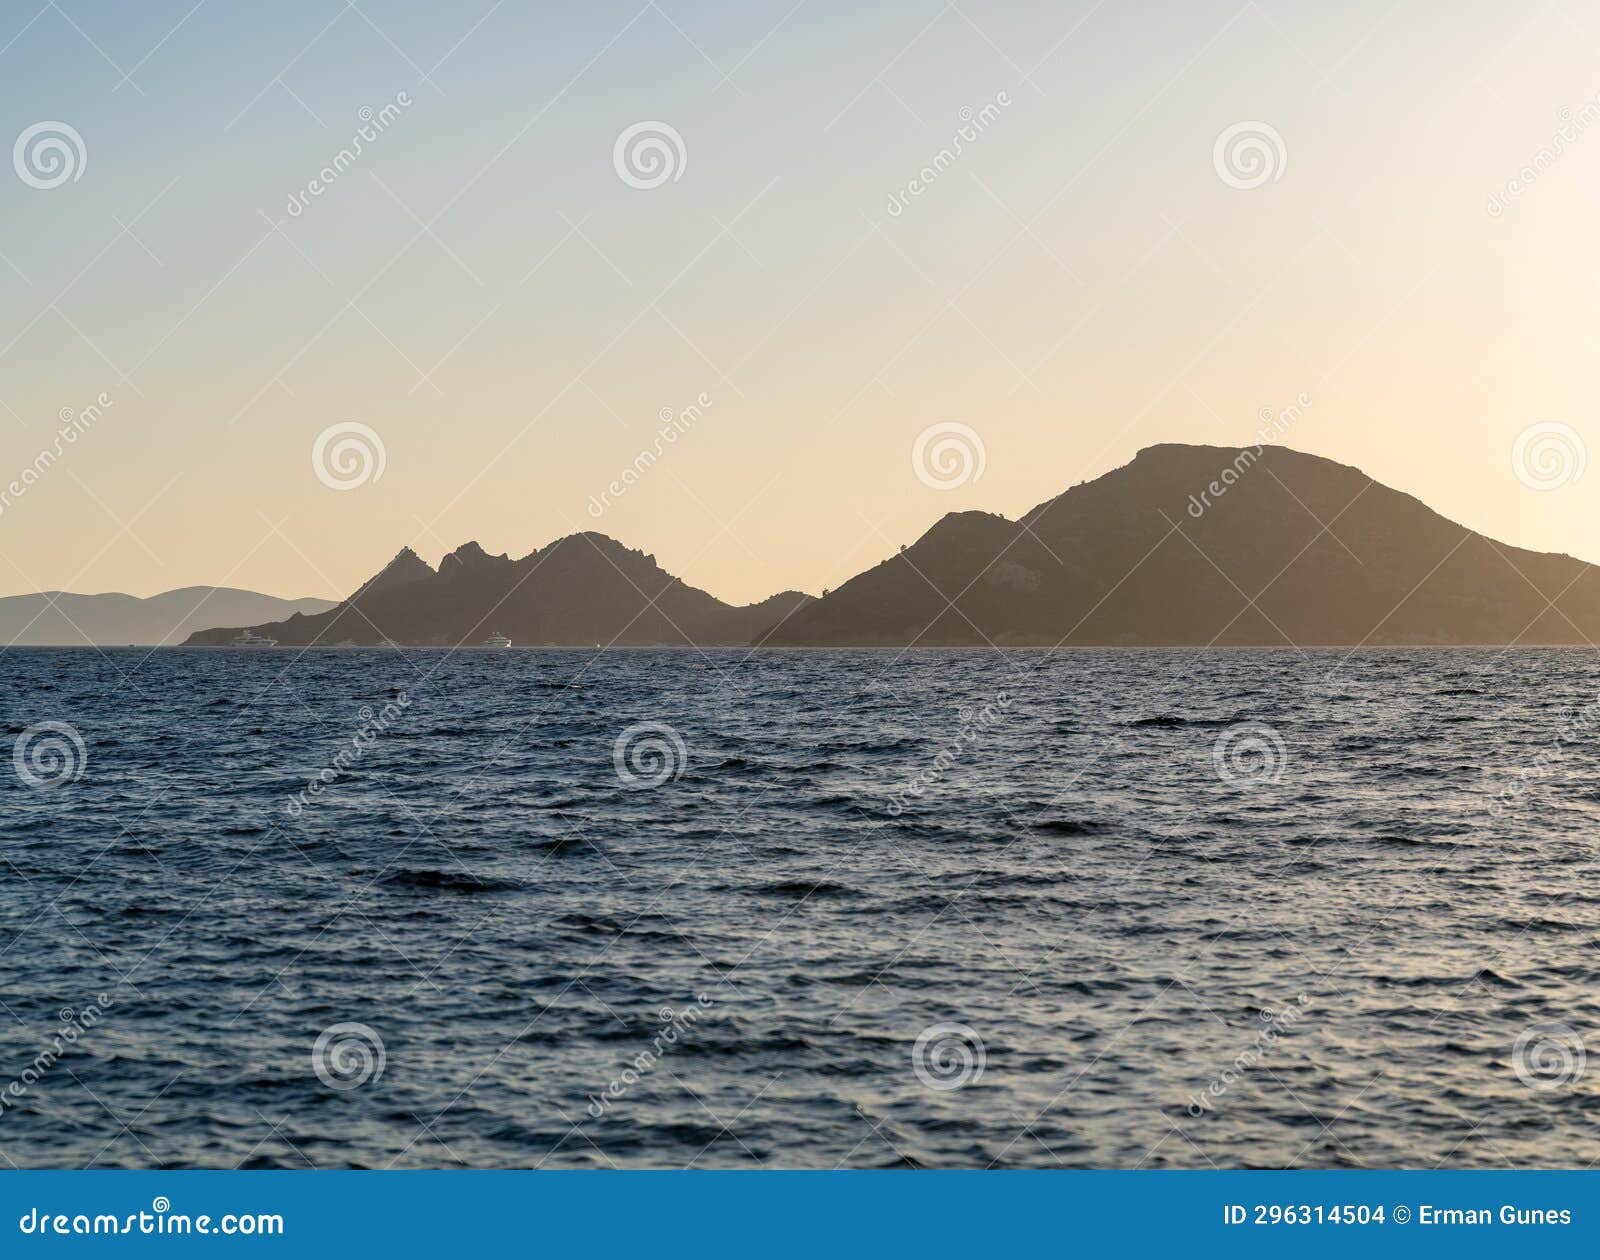 island silhouette. catalada (volo) is a turkish island located in the aegean sea